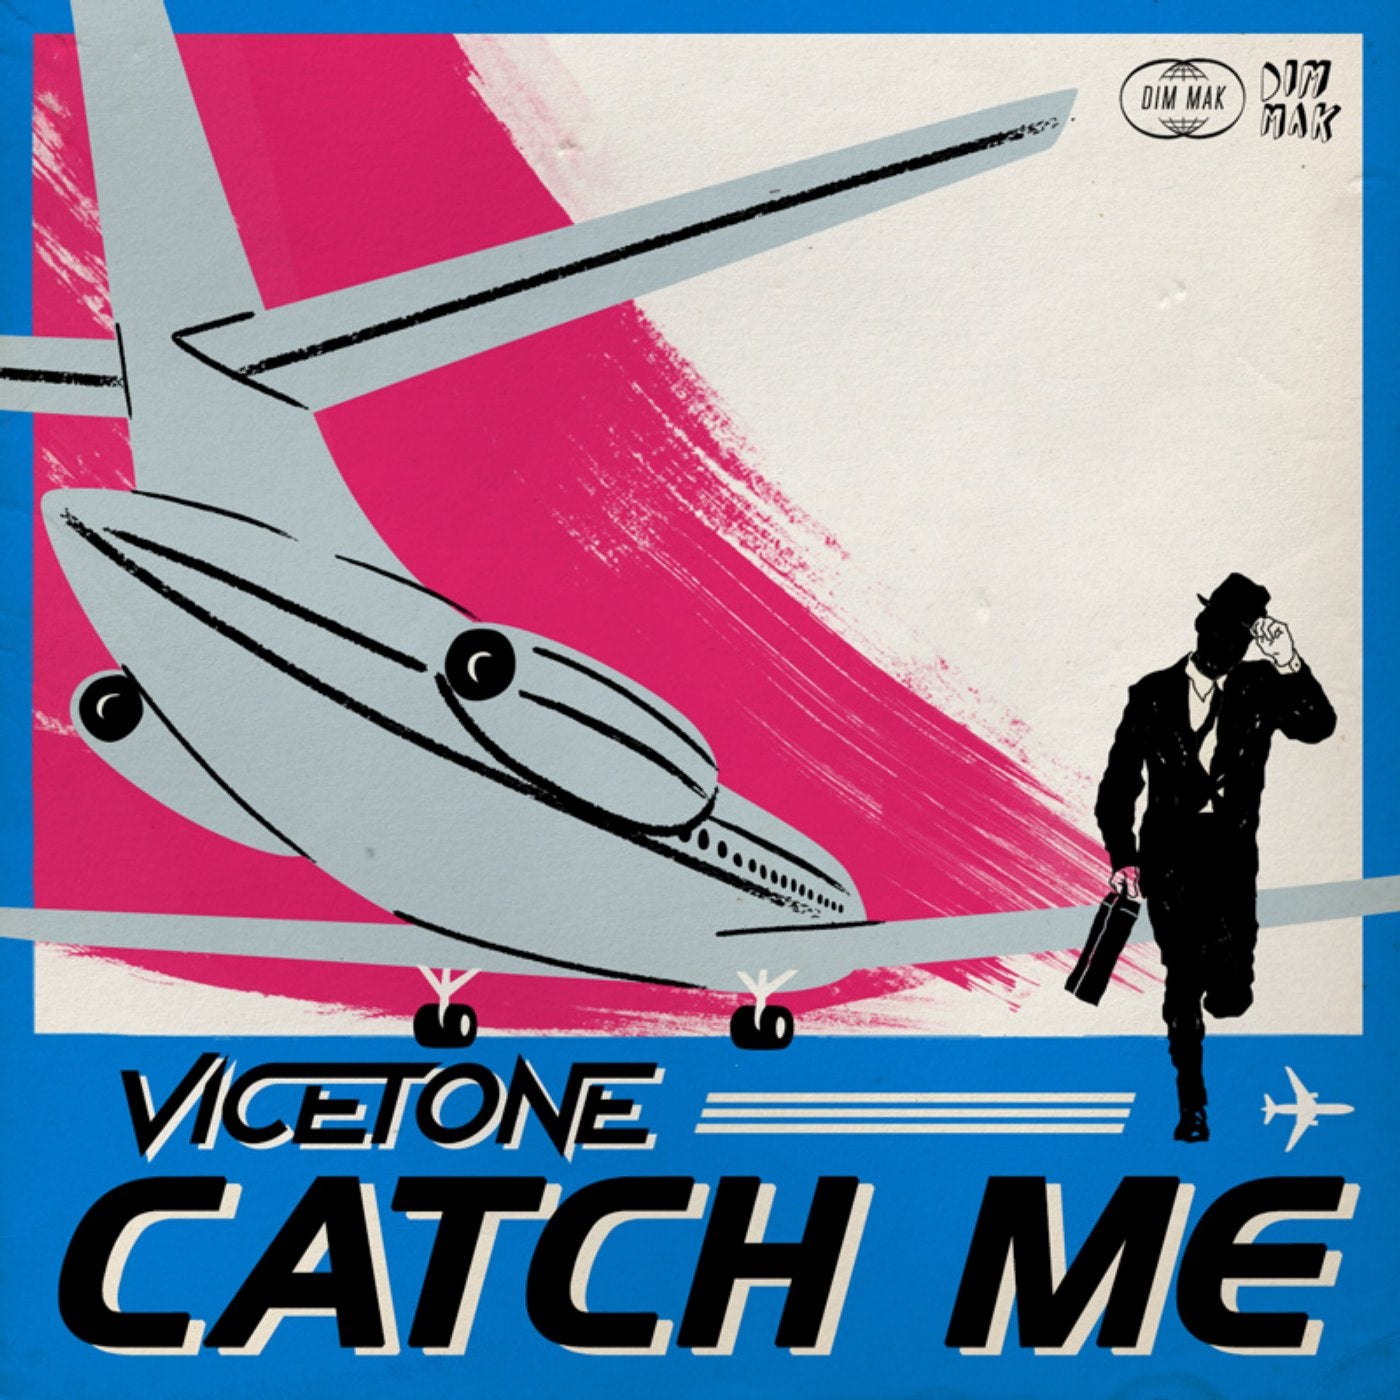 Catch me around. Vicetone - catch me !. Album Art can't catch me. Catch me заставка трека. Gus one catch me картинки.